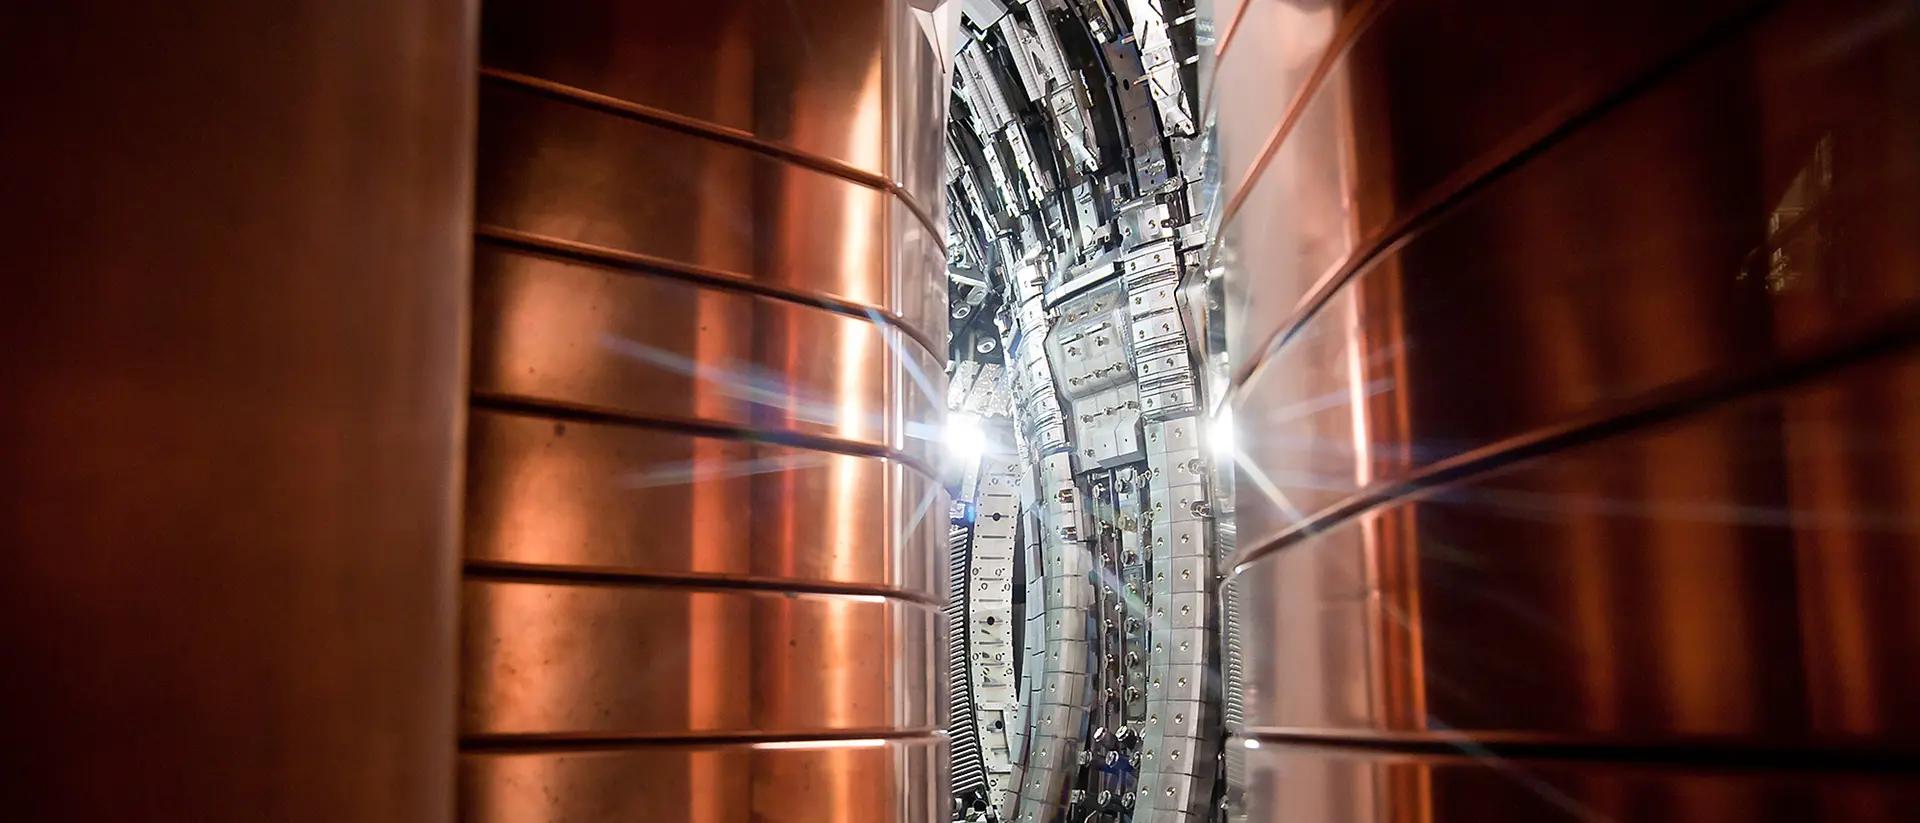 The interior of the tokamak fusion reactor